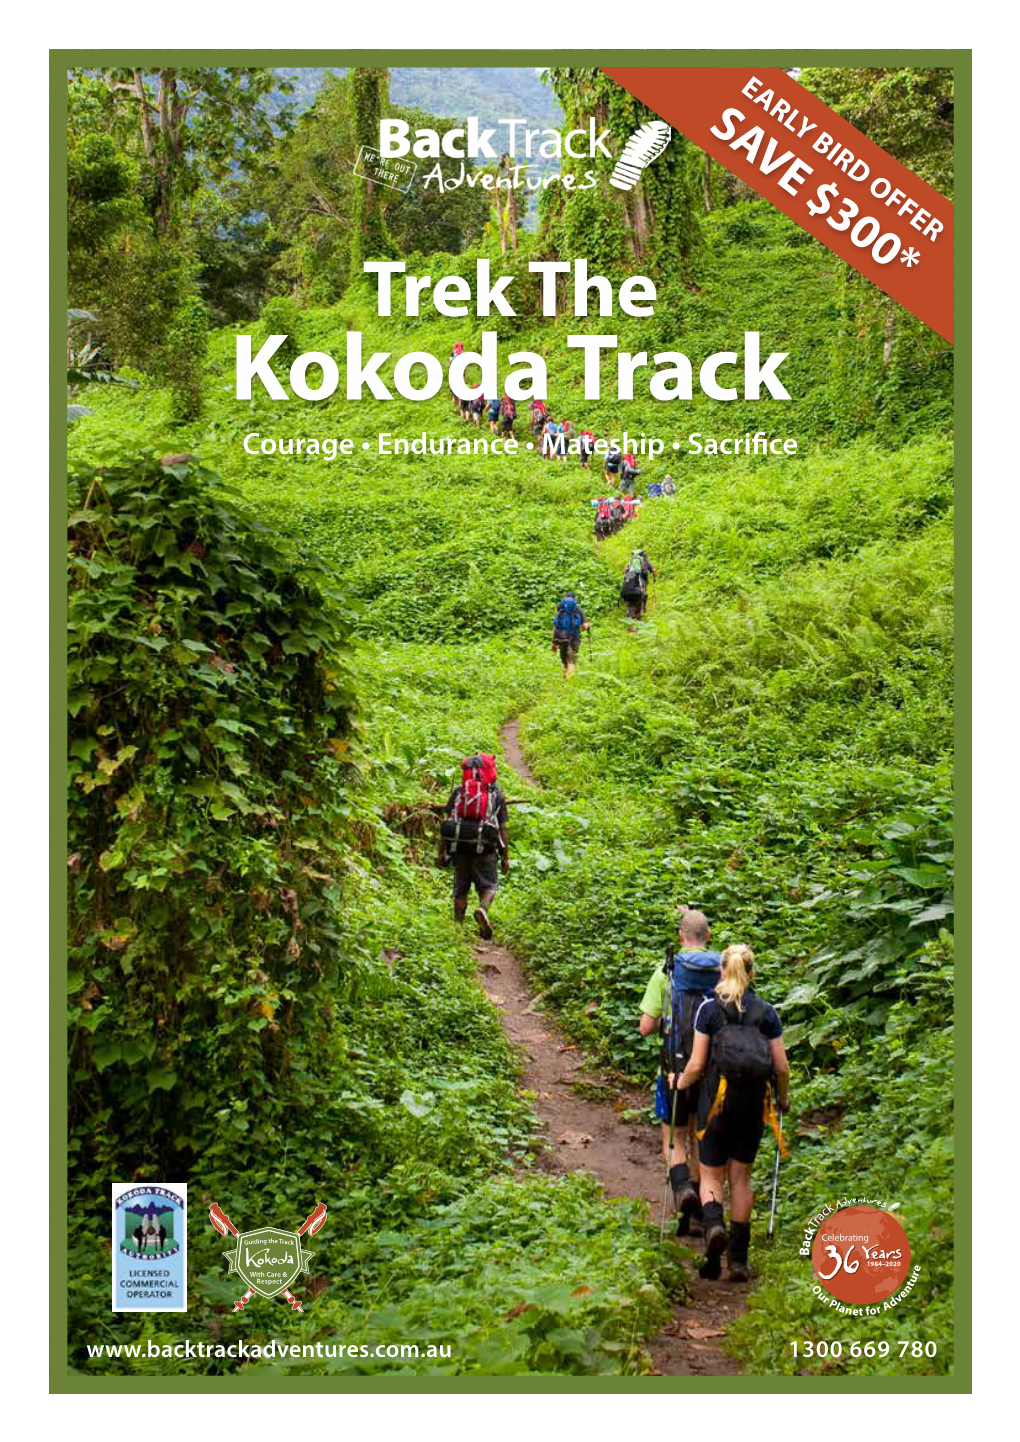 Trek the Kokoda Track Courage • Endurance • Mateship • Sacrifice